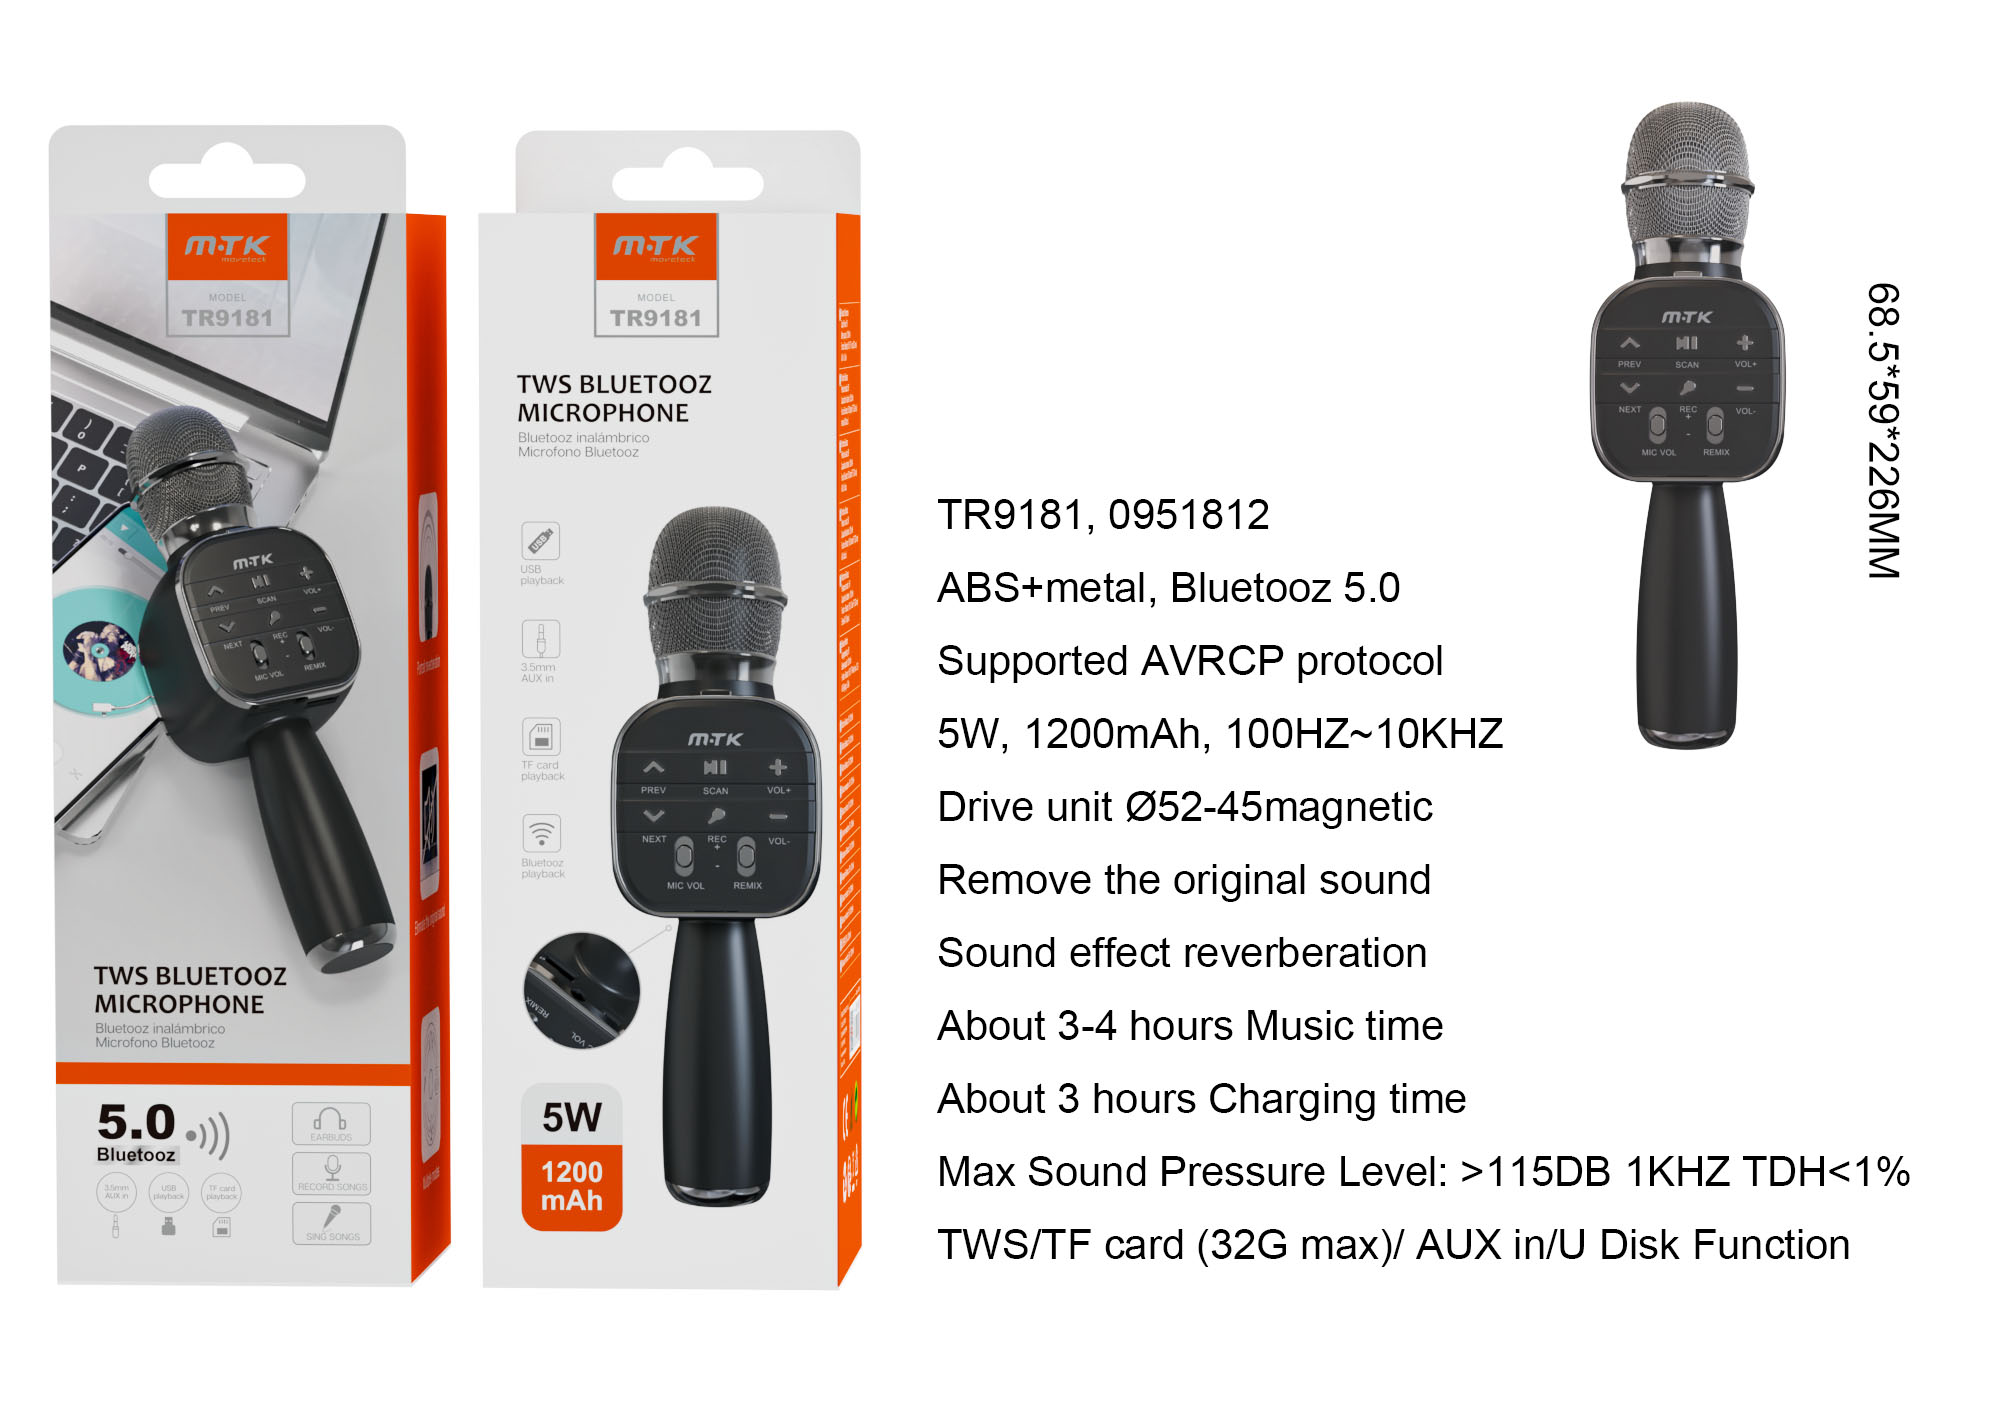 TR9181 NE Microfono TWS Bluetooth 5.0 AVRCP, Frecuncia100Hz-10KHz, Soporta Entrada de audio/USB/TF (32GMax), Bateria 1200mAh/5W, Negro